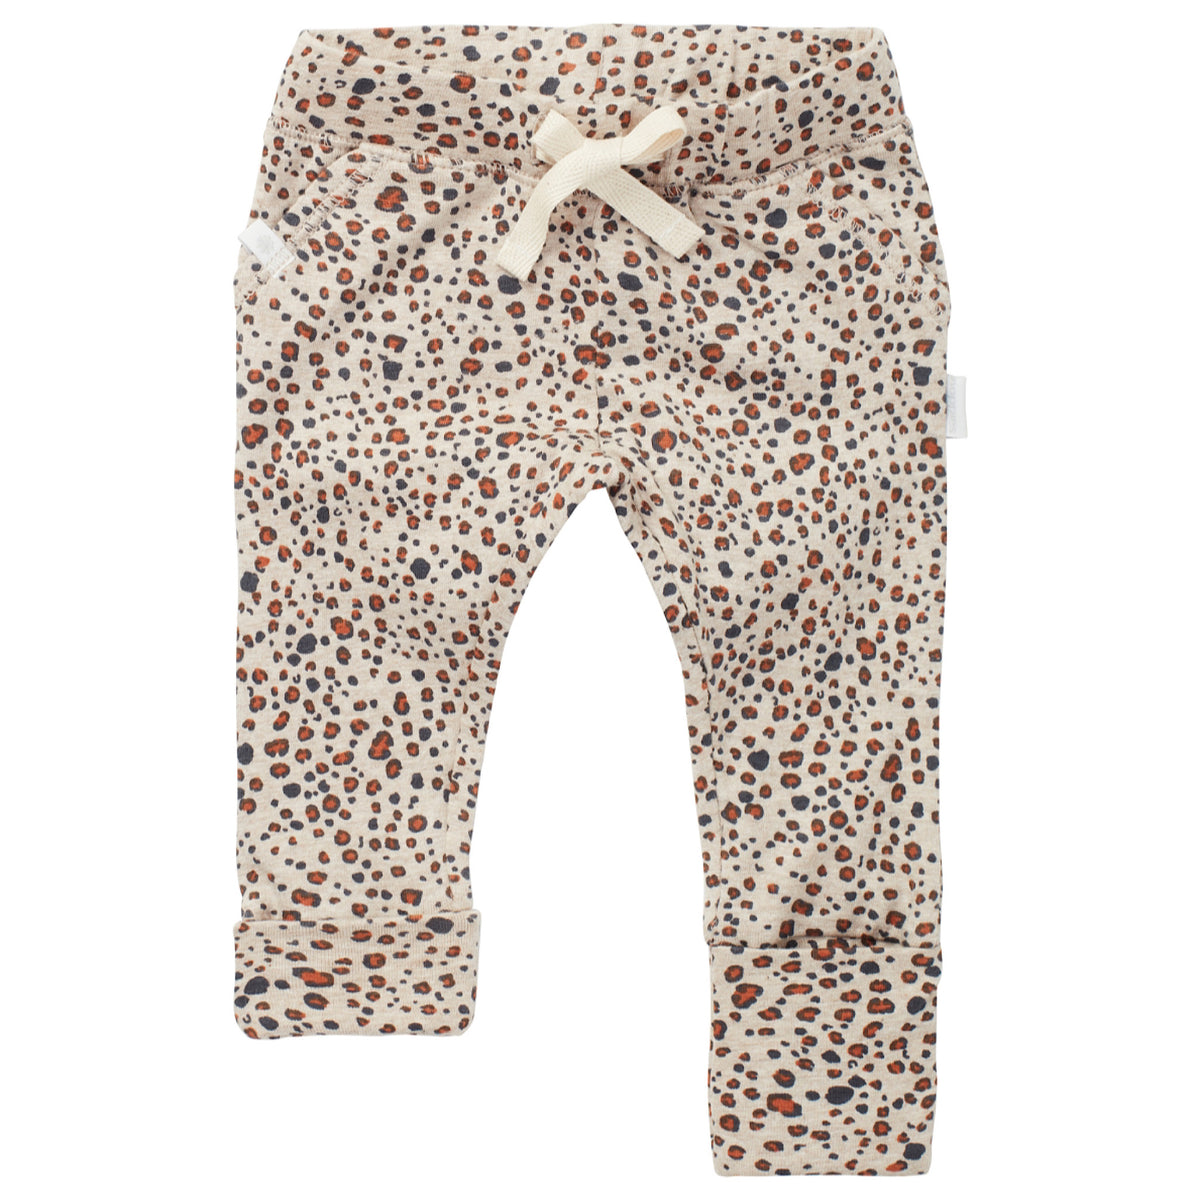 Sevenoaks Trousers, Leopard Print